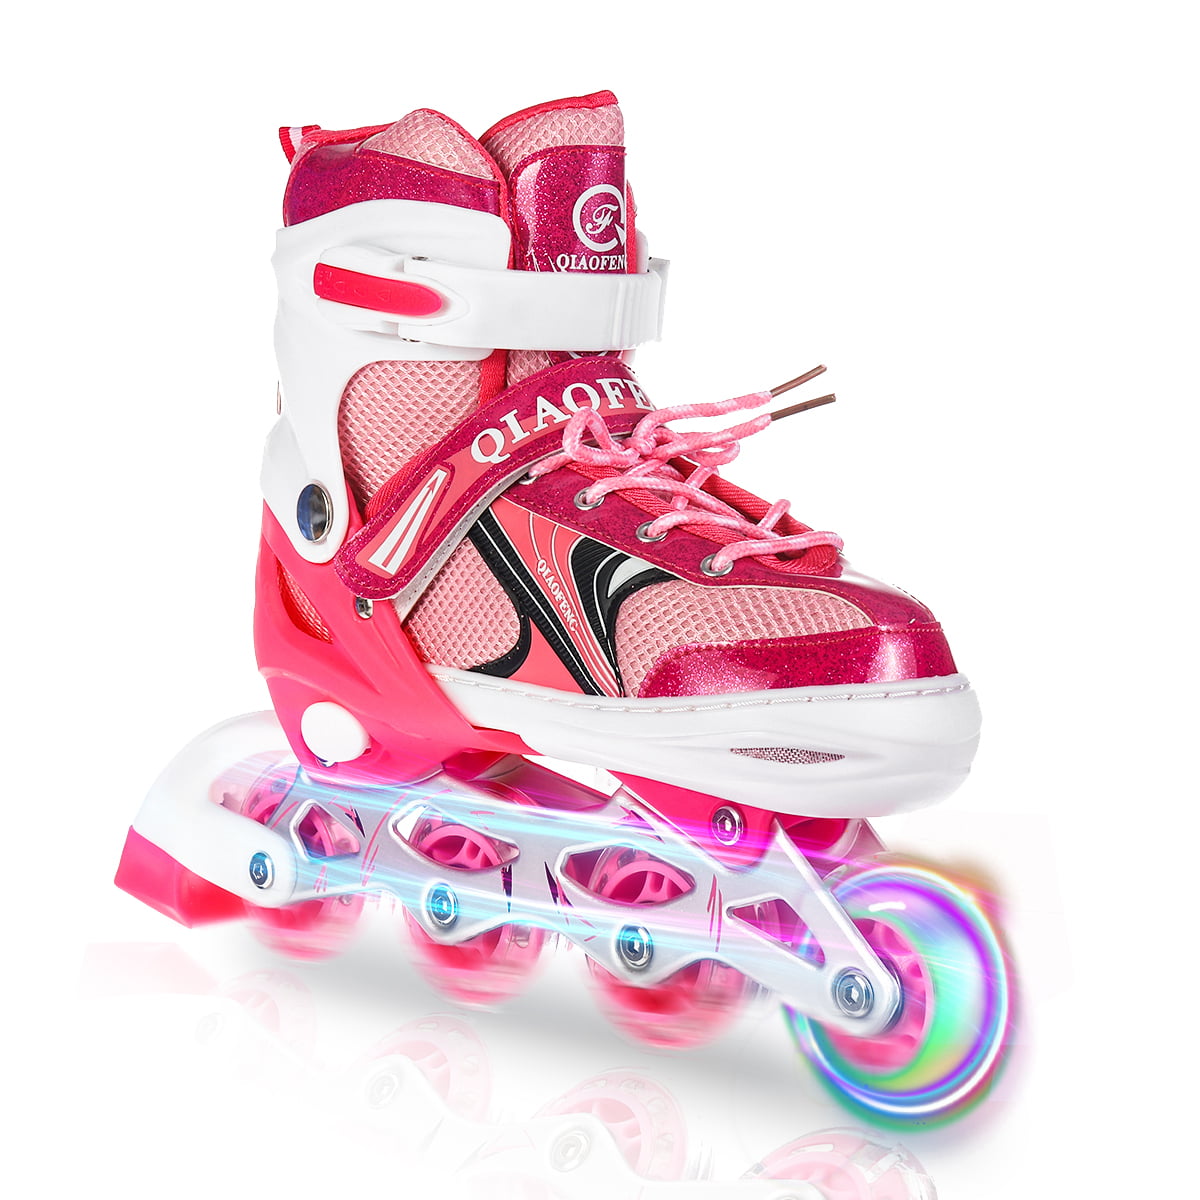 NEW Adjustable Inline Skates Roller Blades Adult Size 8-10.5 Breathable a e 35 